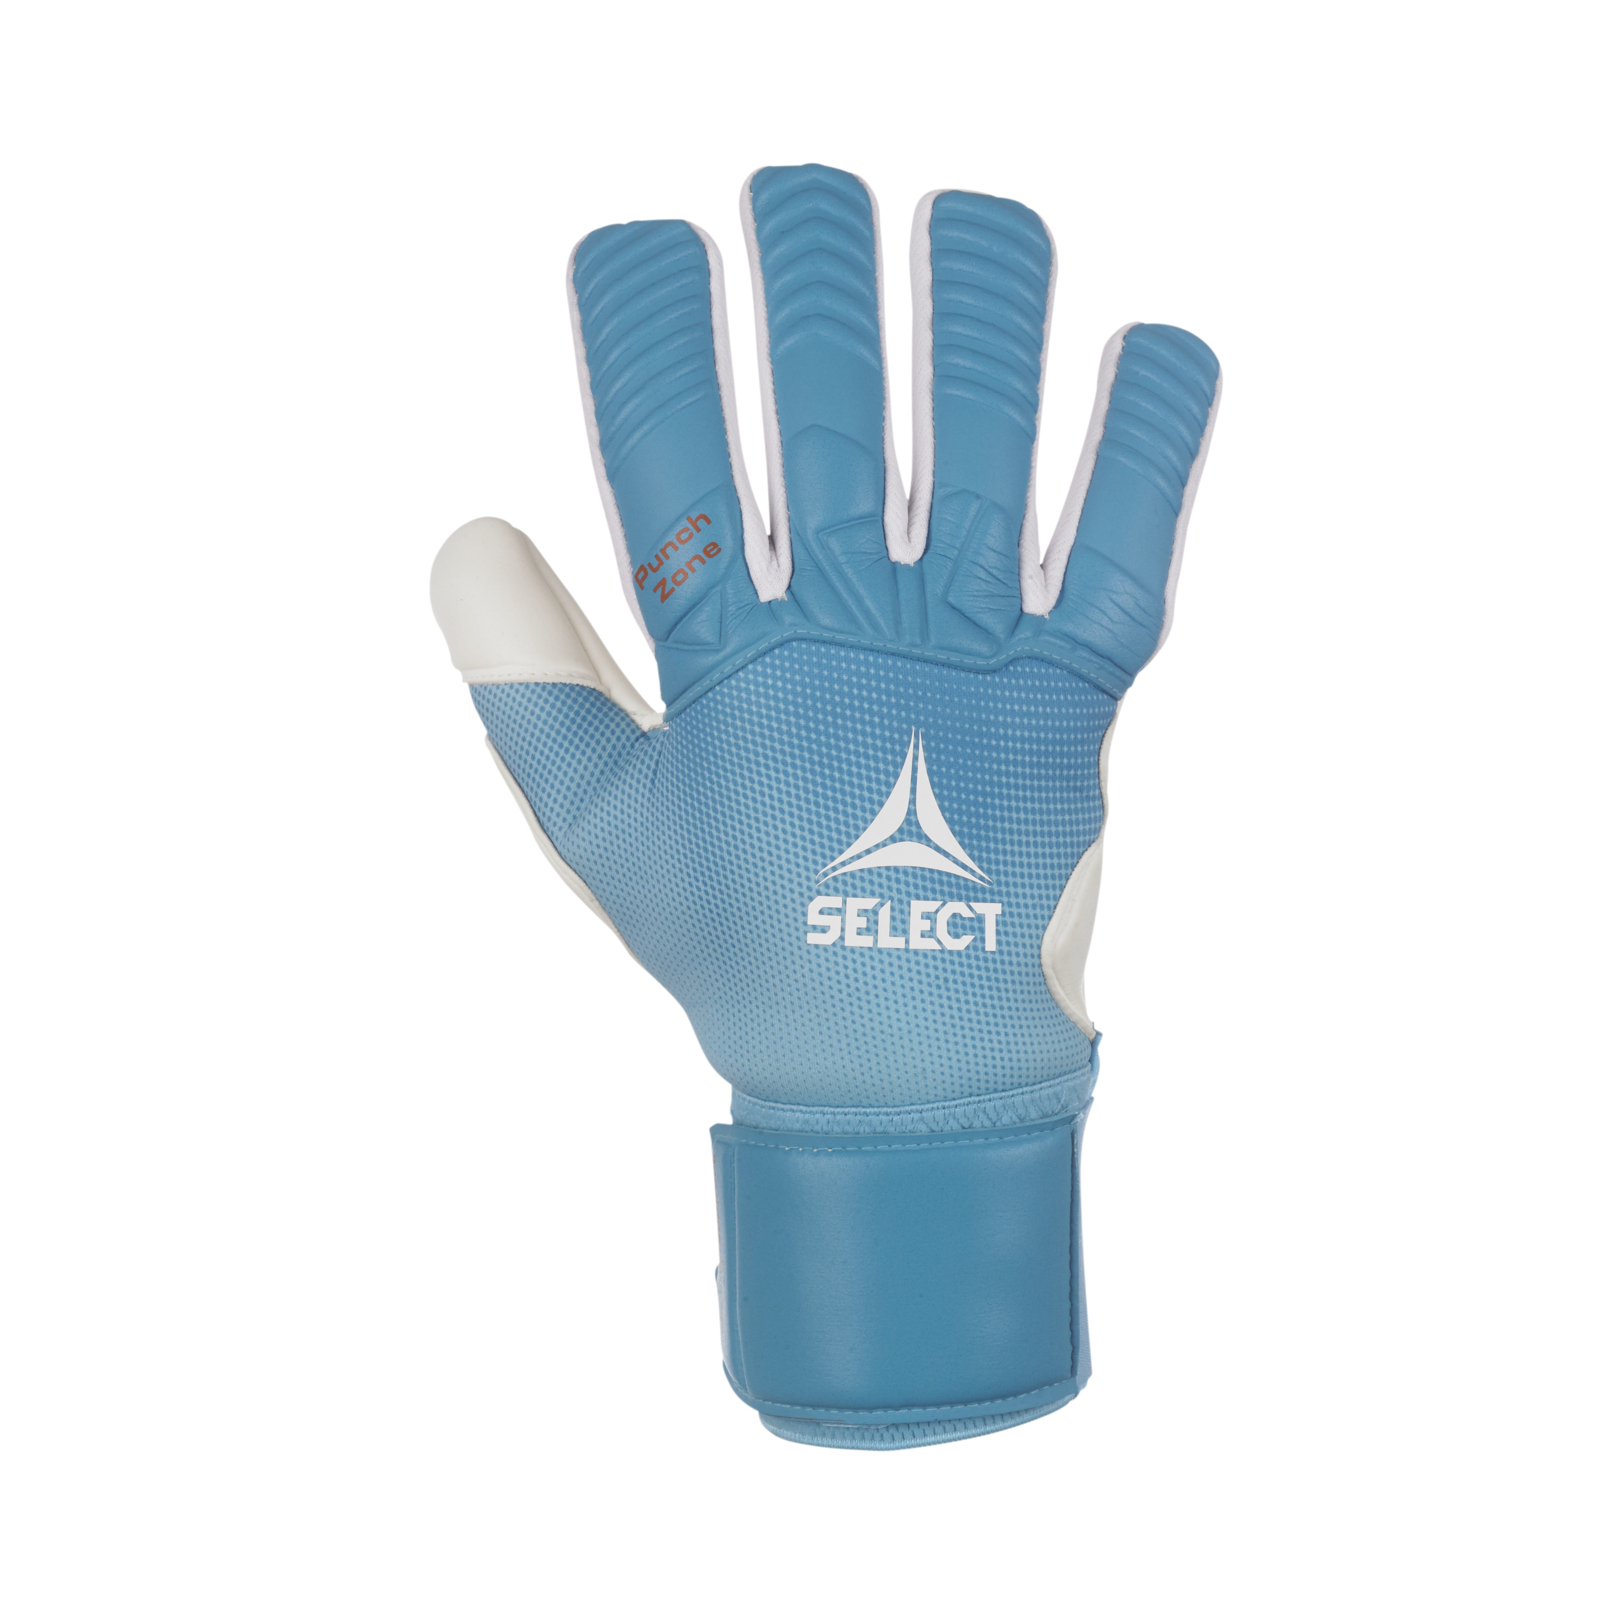 Вратарские перчатки Select Goalkeeper Gloves 33 601331-410 Allround синій, білий Уні 9 (5703543316427) изображение 3